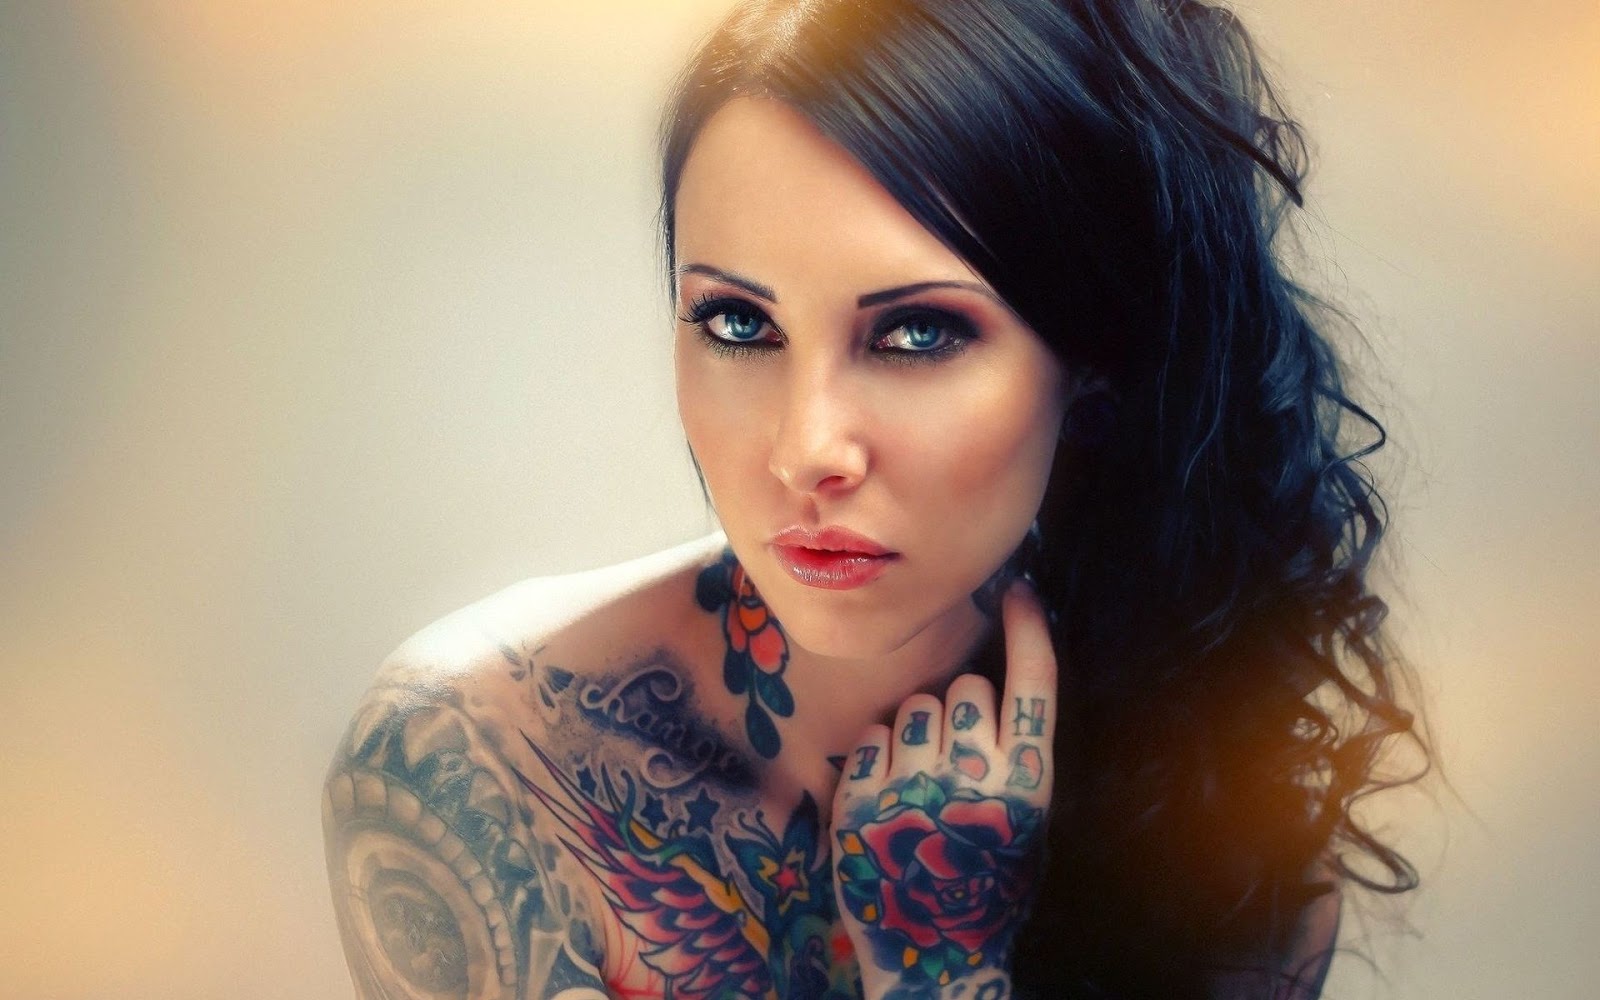 hot tattoo girl wallpaper,cabello,cara,ceja,labio,hombro